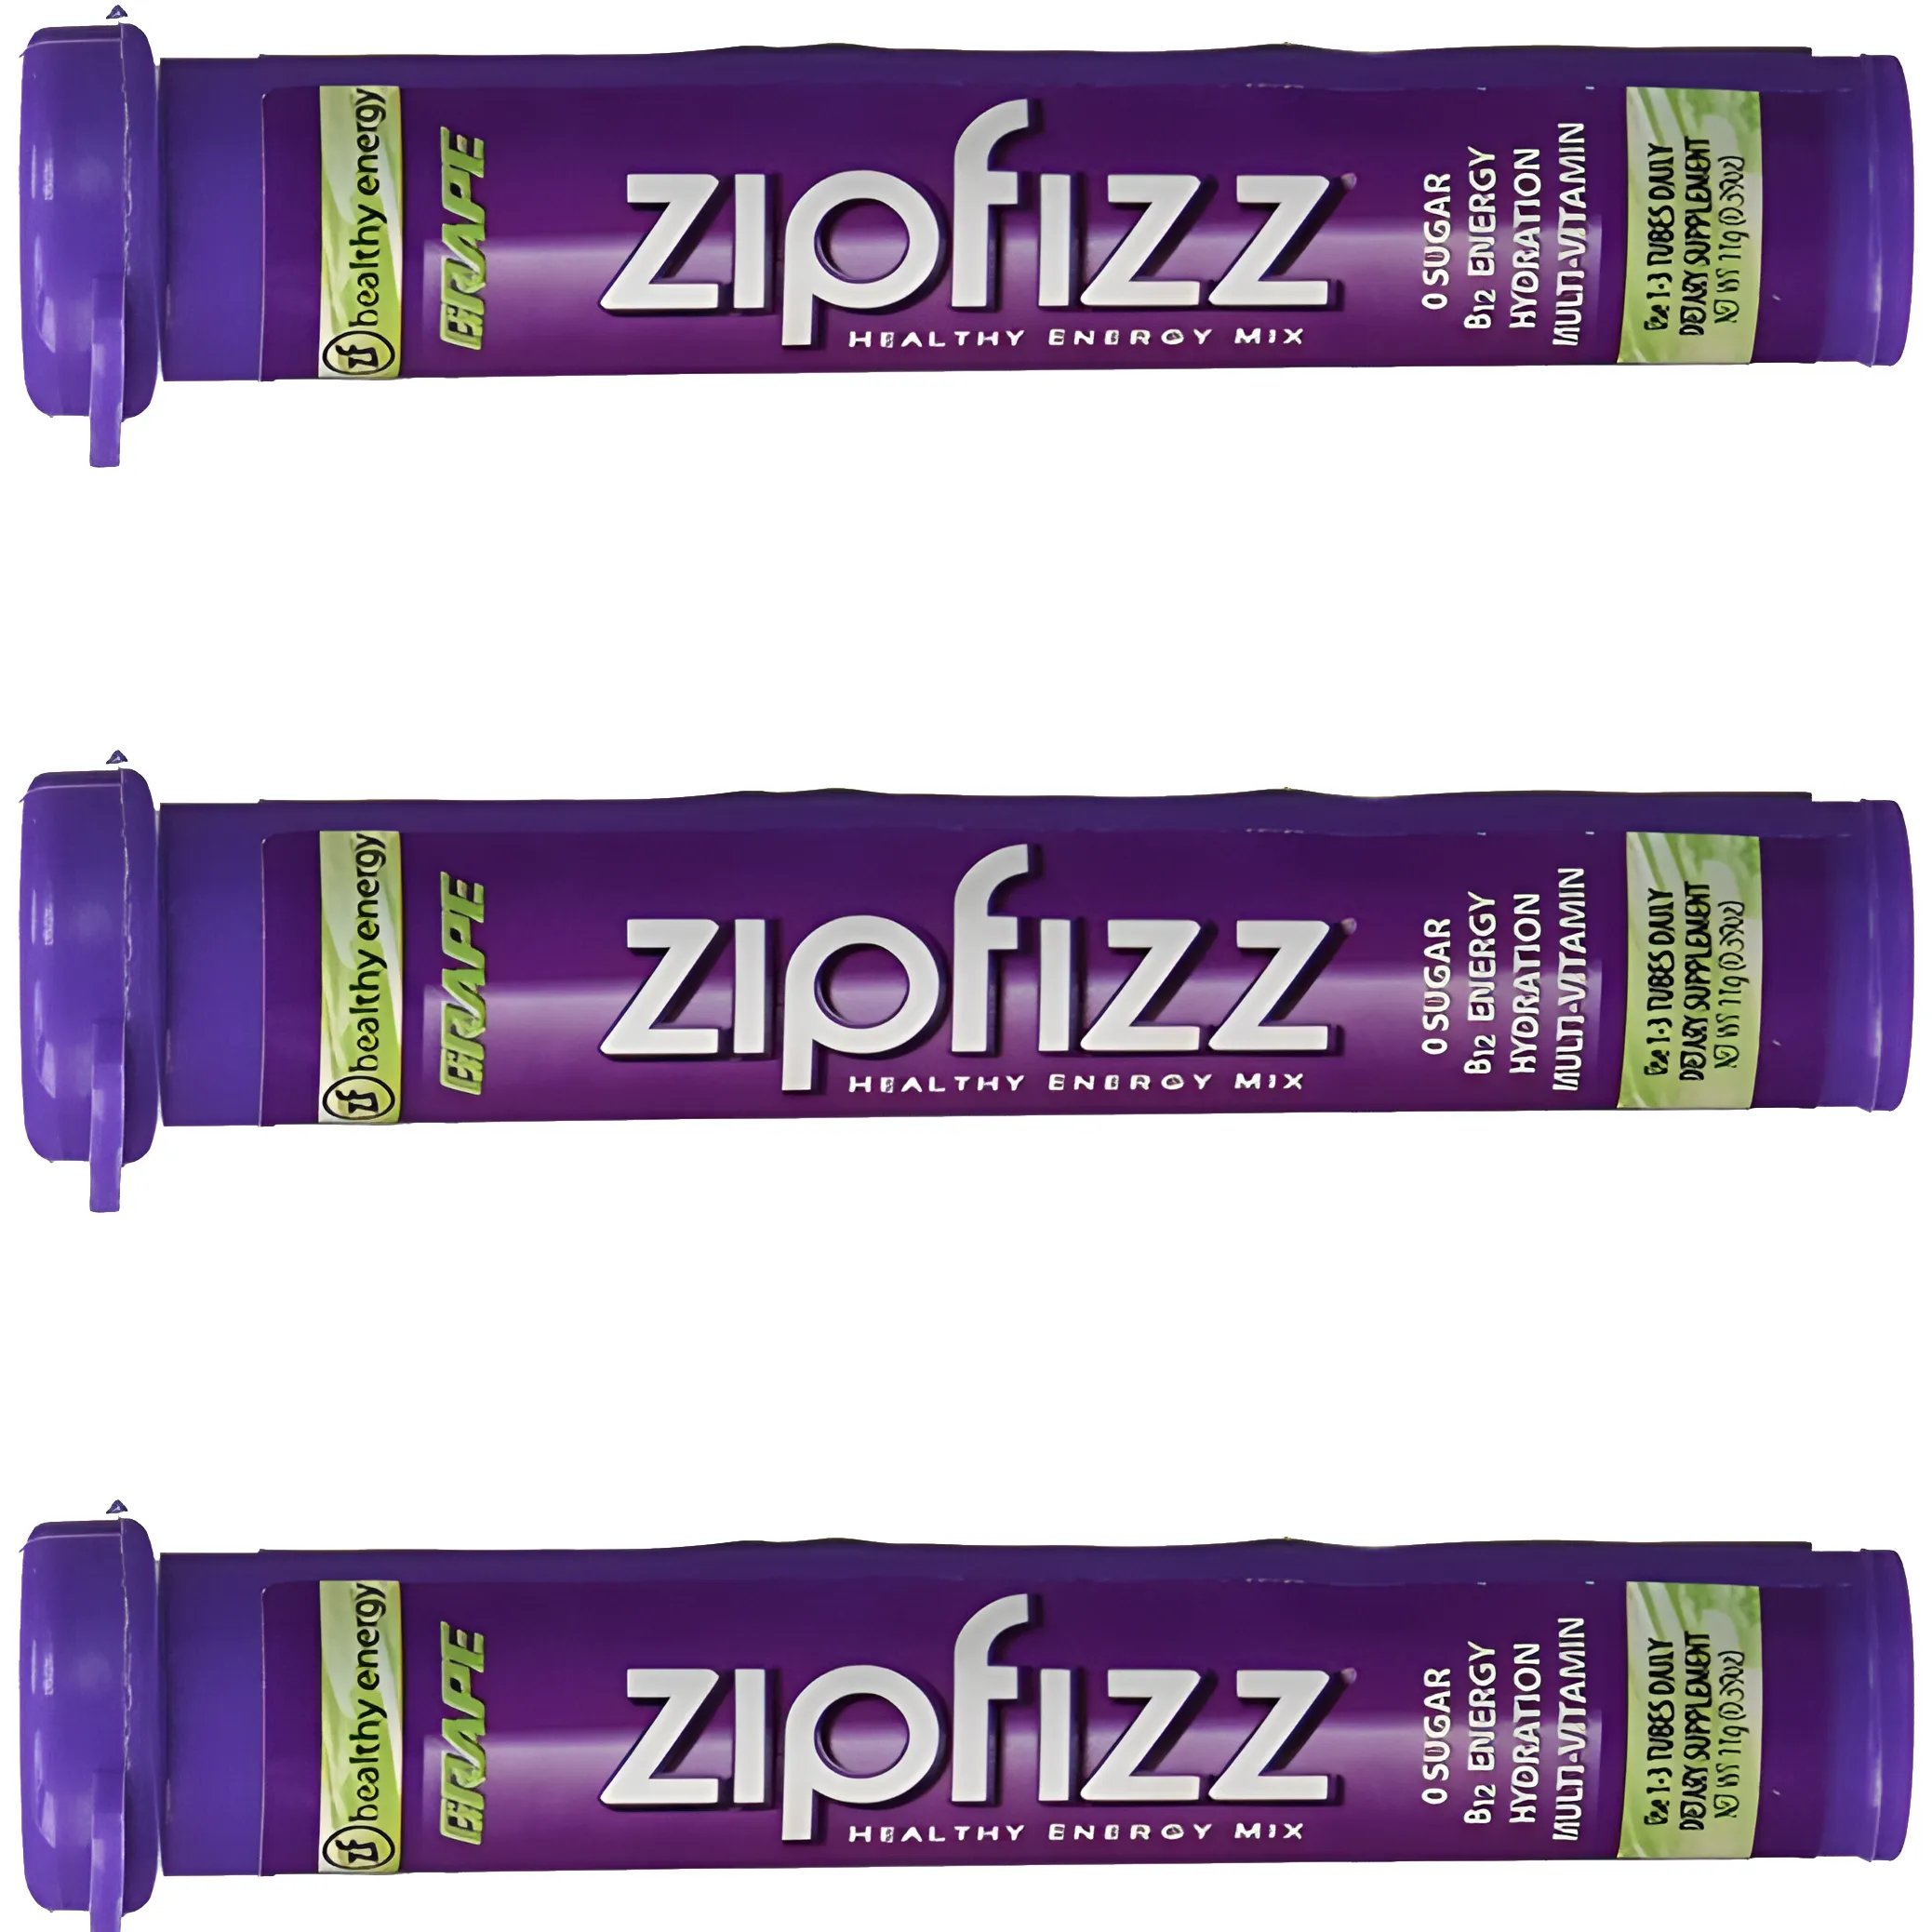 Free Zipfizz Drink Mix